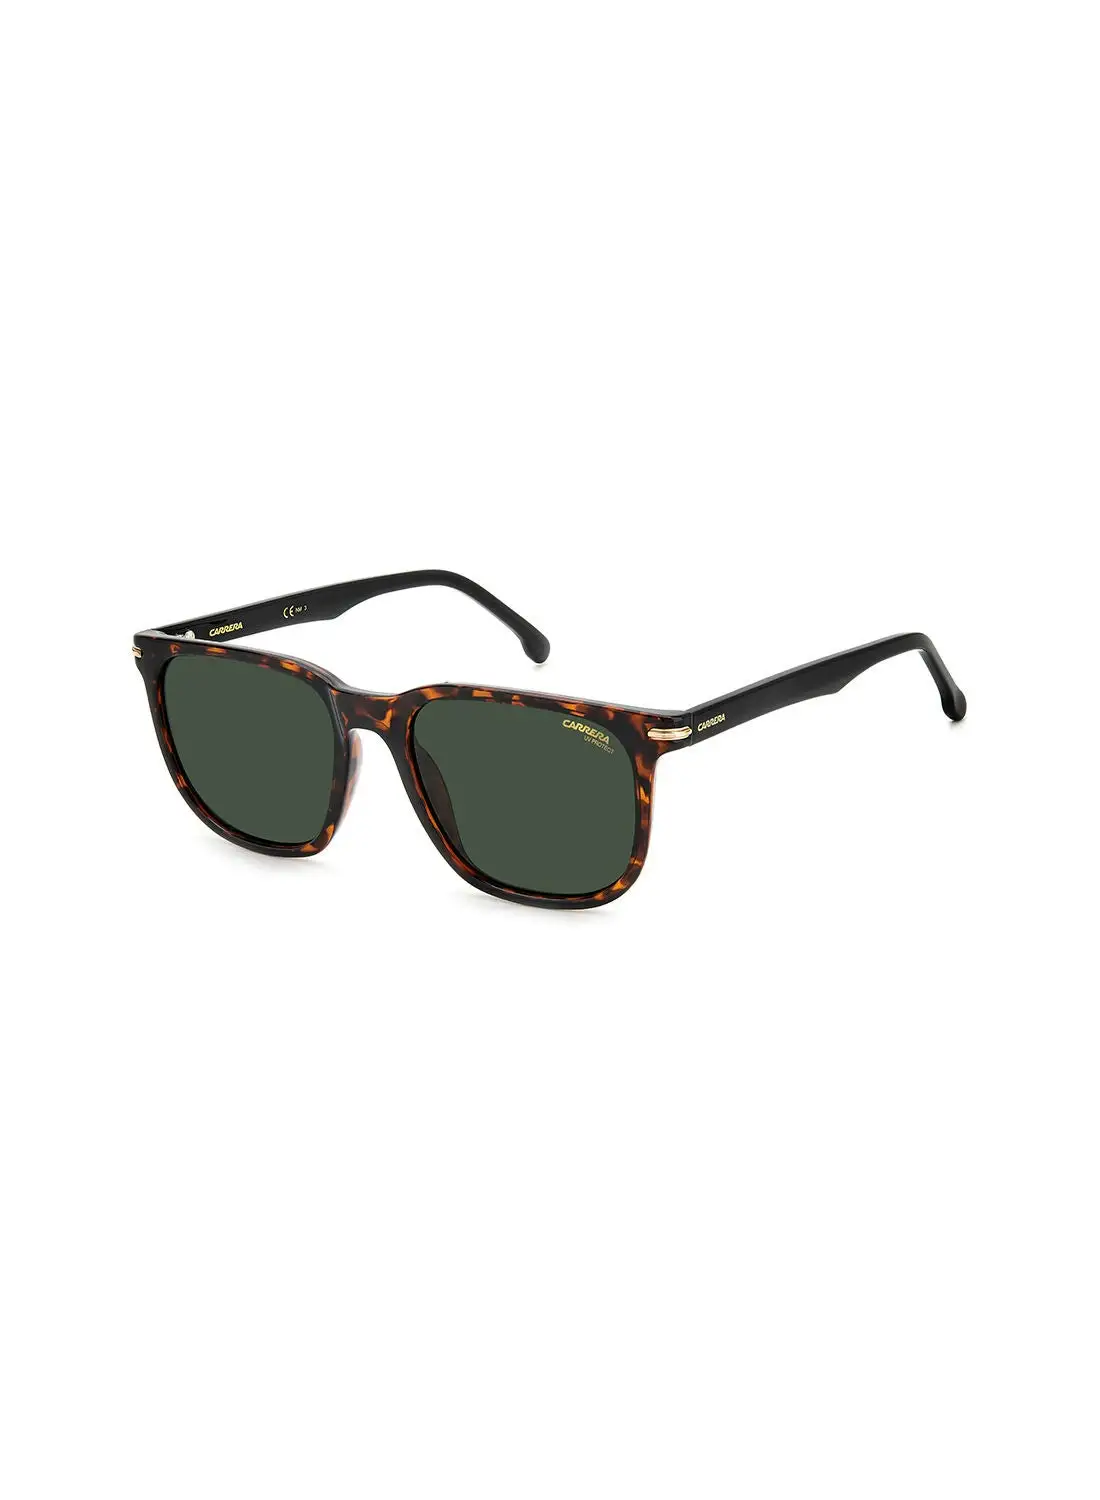 Carrera Unisex UV Protection Square Sunglasses - Carrera 300/S Havana 54 - Lens Size: 54 Mm